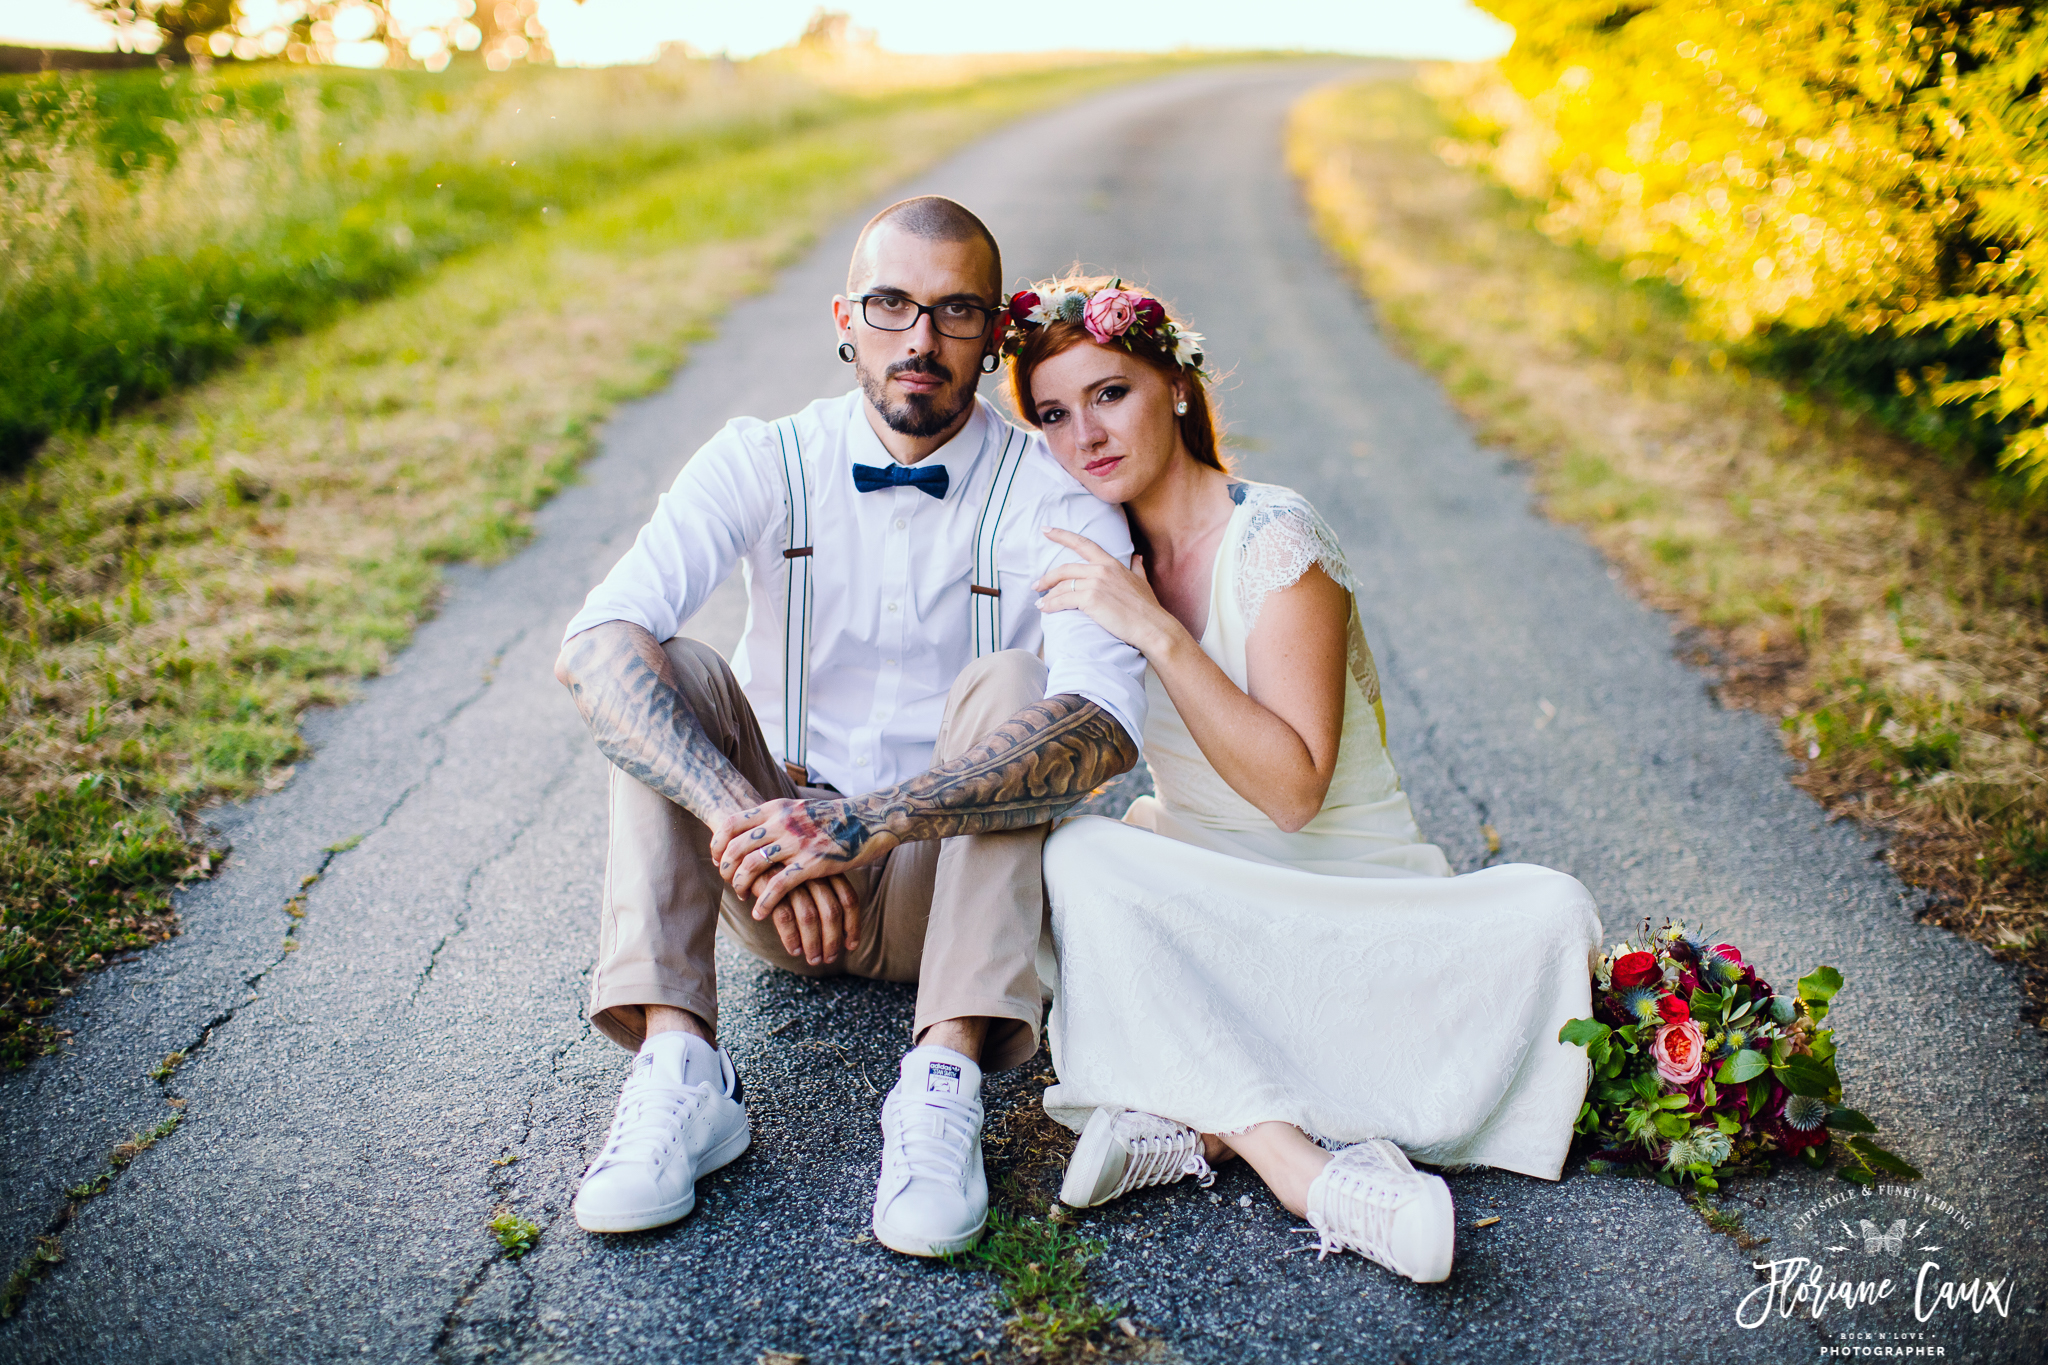 photographe-mariage-toulouse-rocknroll-maries-tatoues-floriane-caux-70